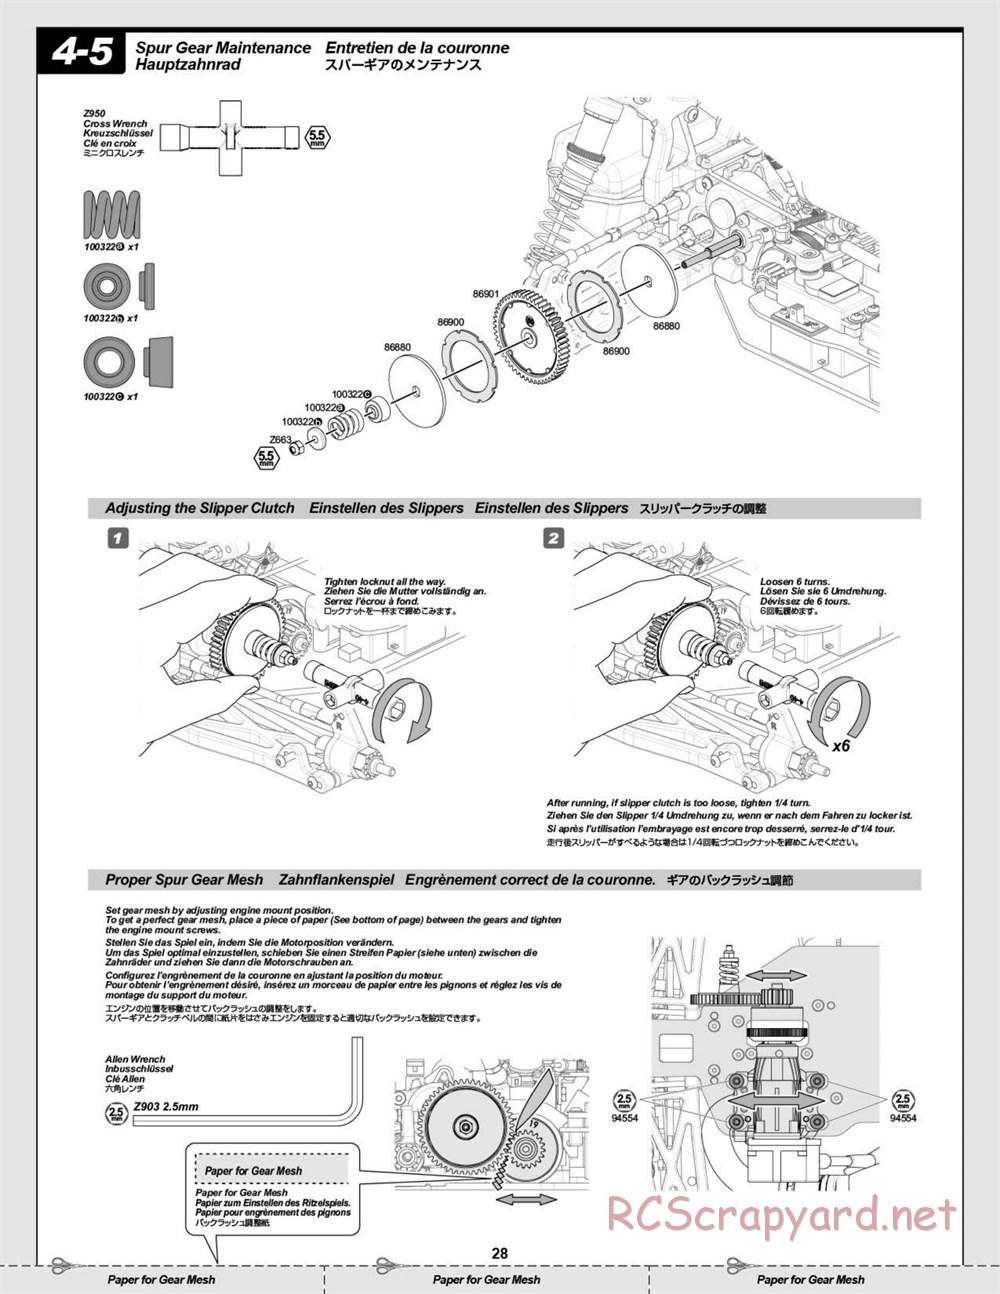 HPI - Firestorm 10T - Manual - Page 28